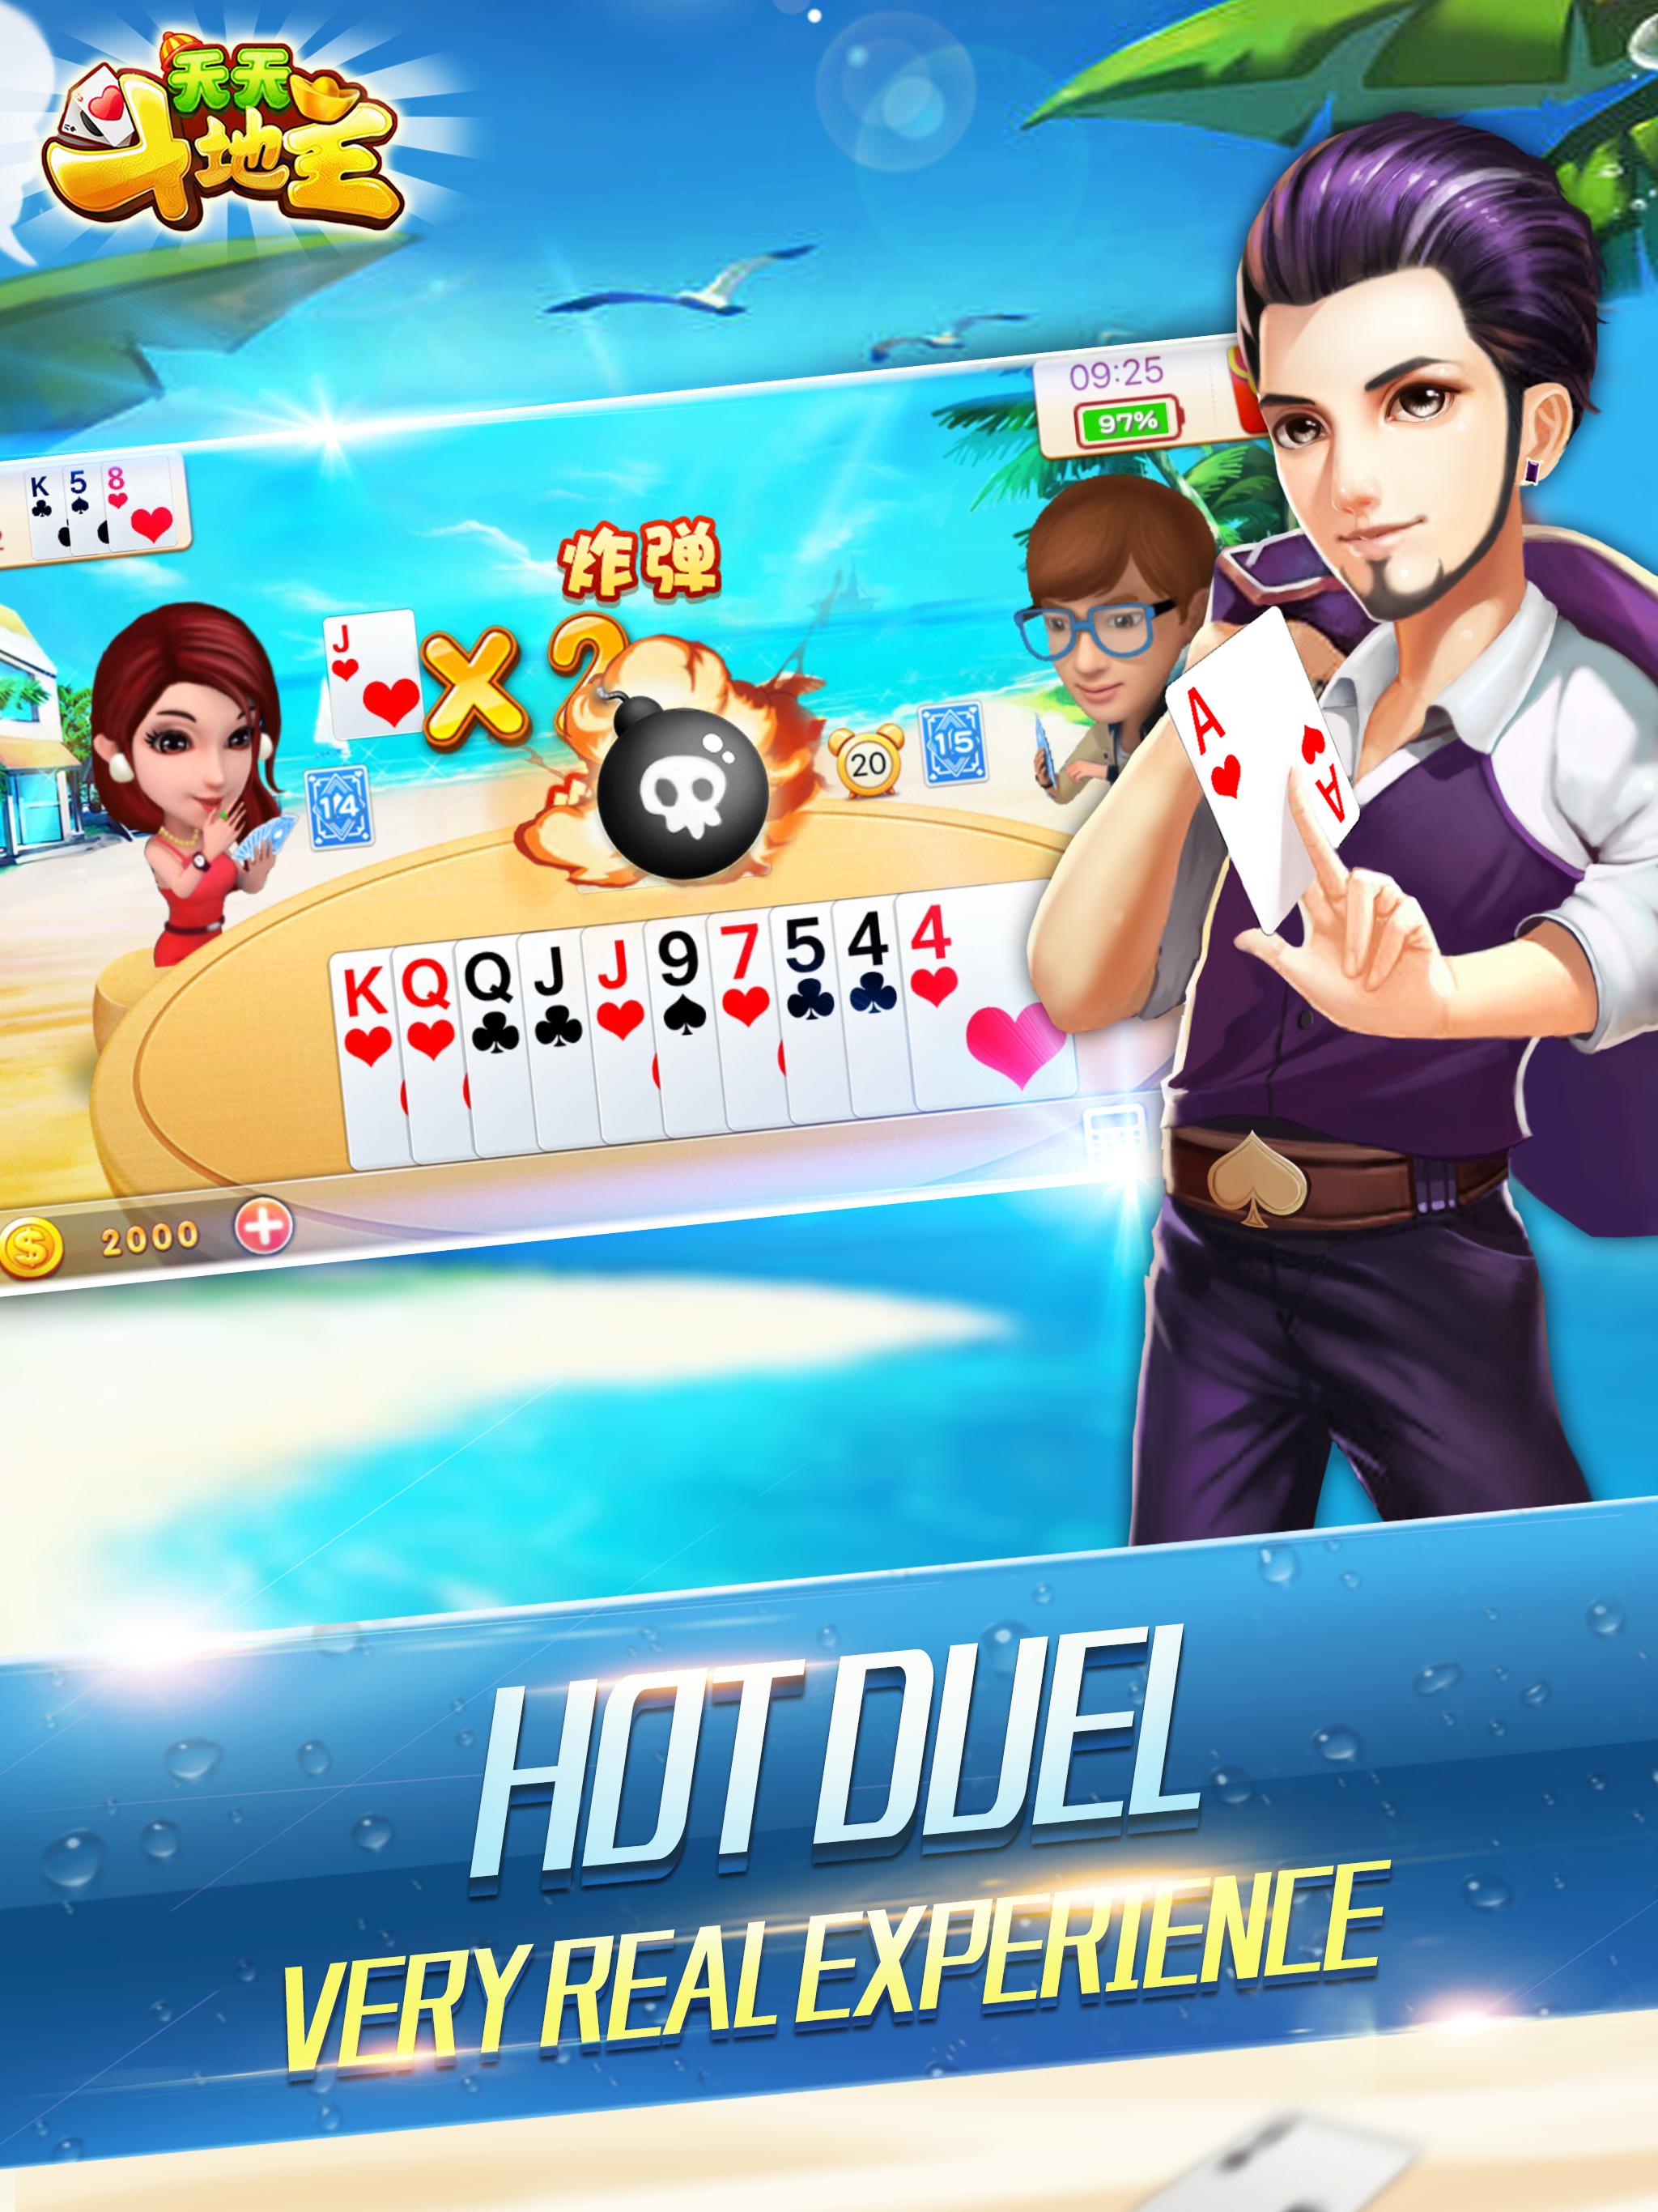 landlords-casino game and card game 1.0 Screenshot 8